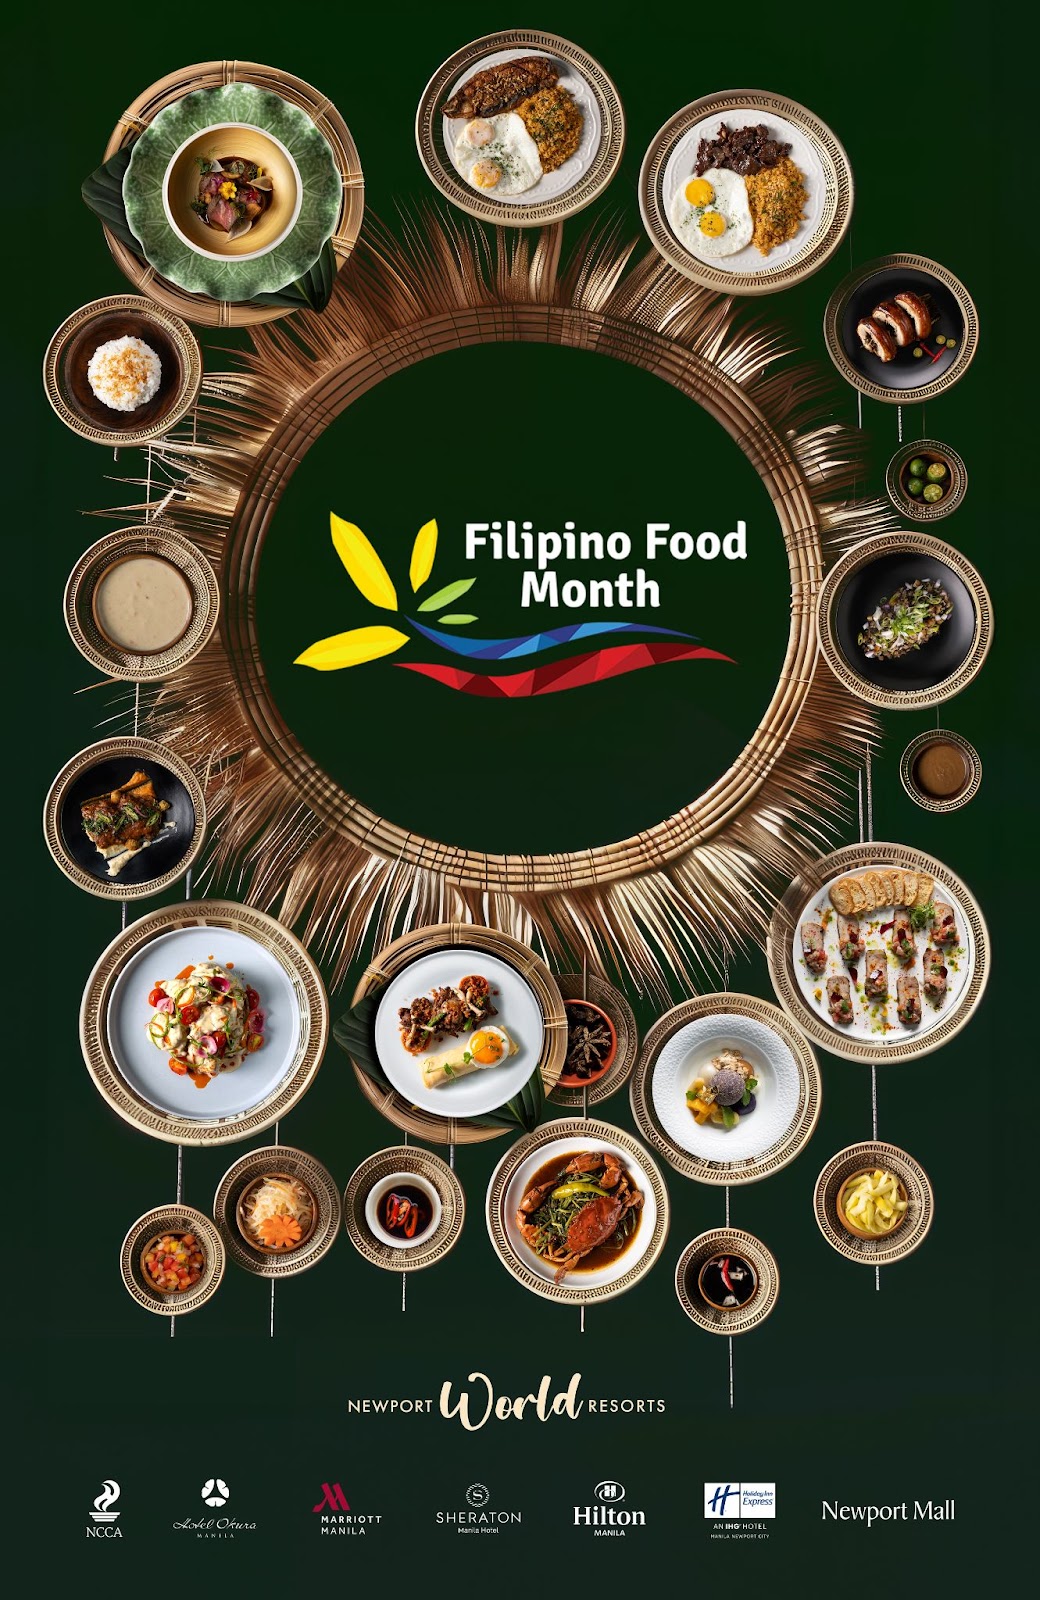 Newport World Resorts spotlights local dishes for Filipino Food Month